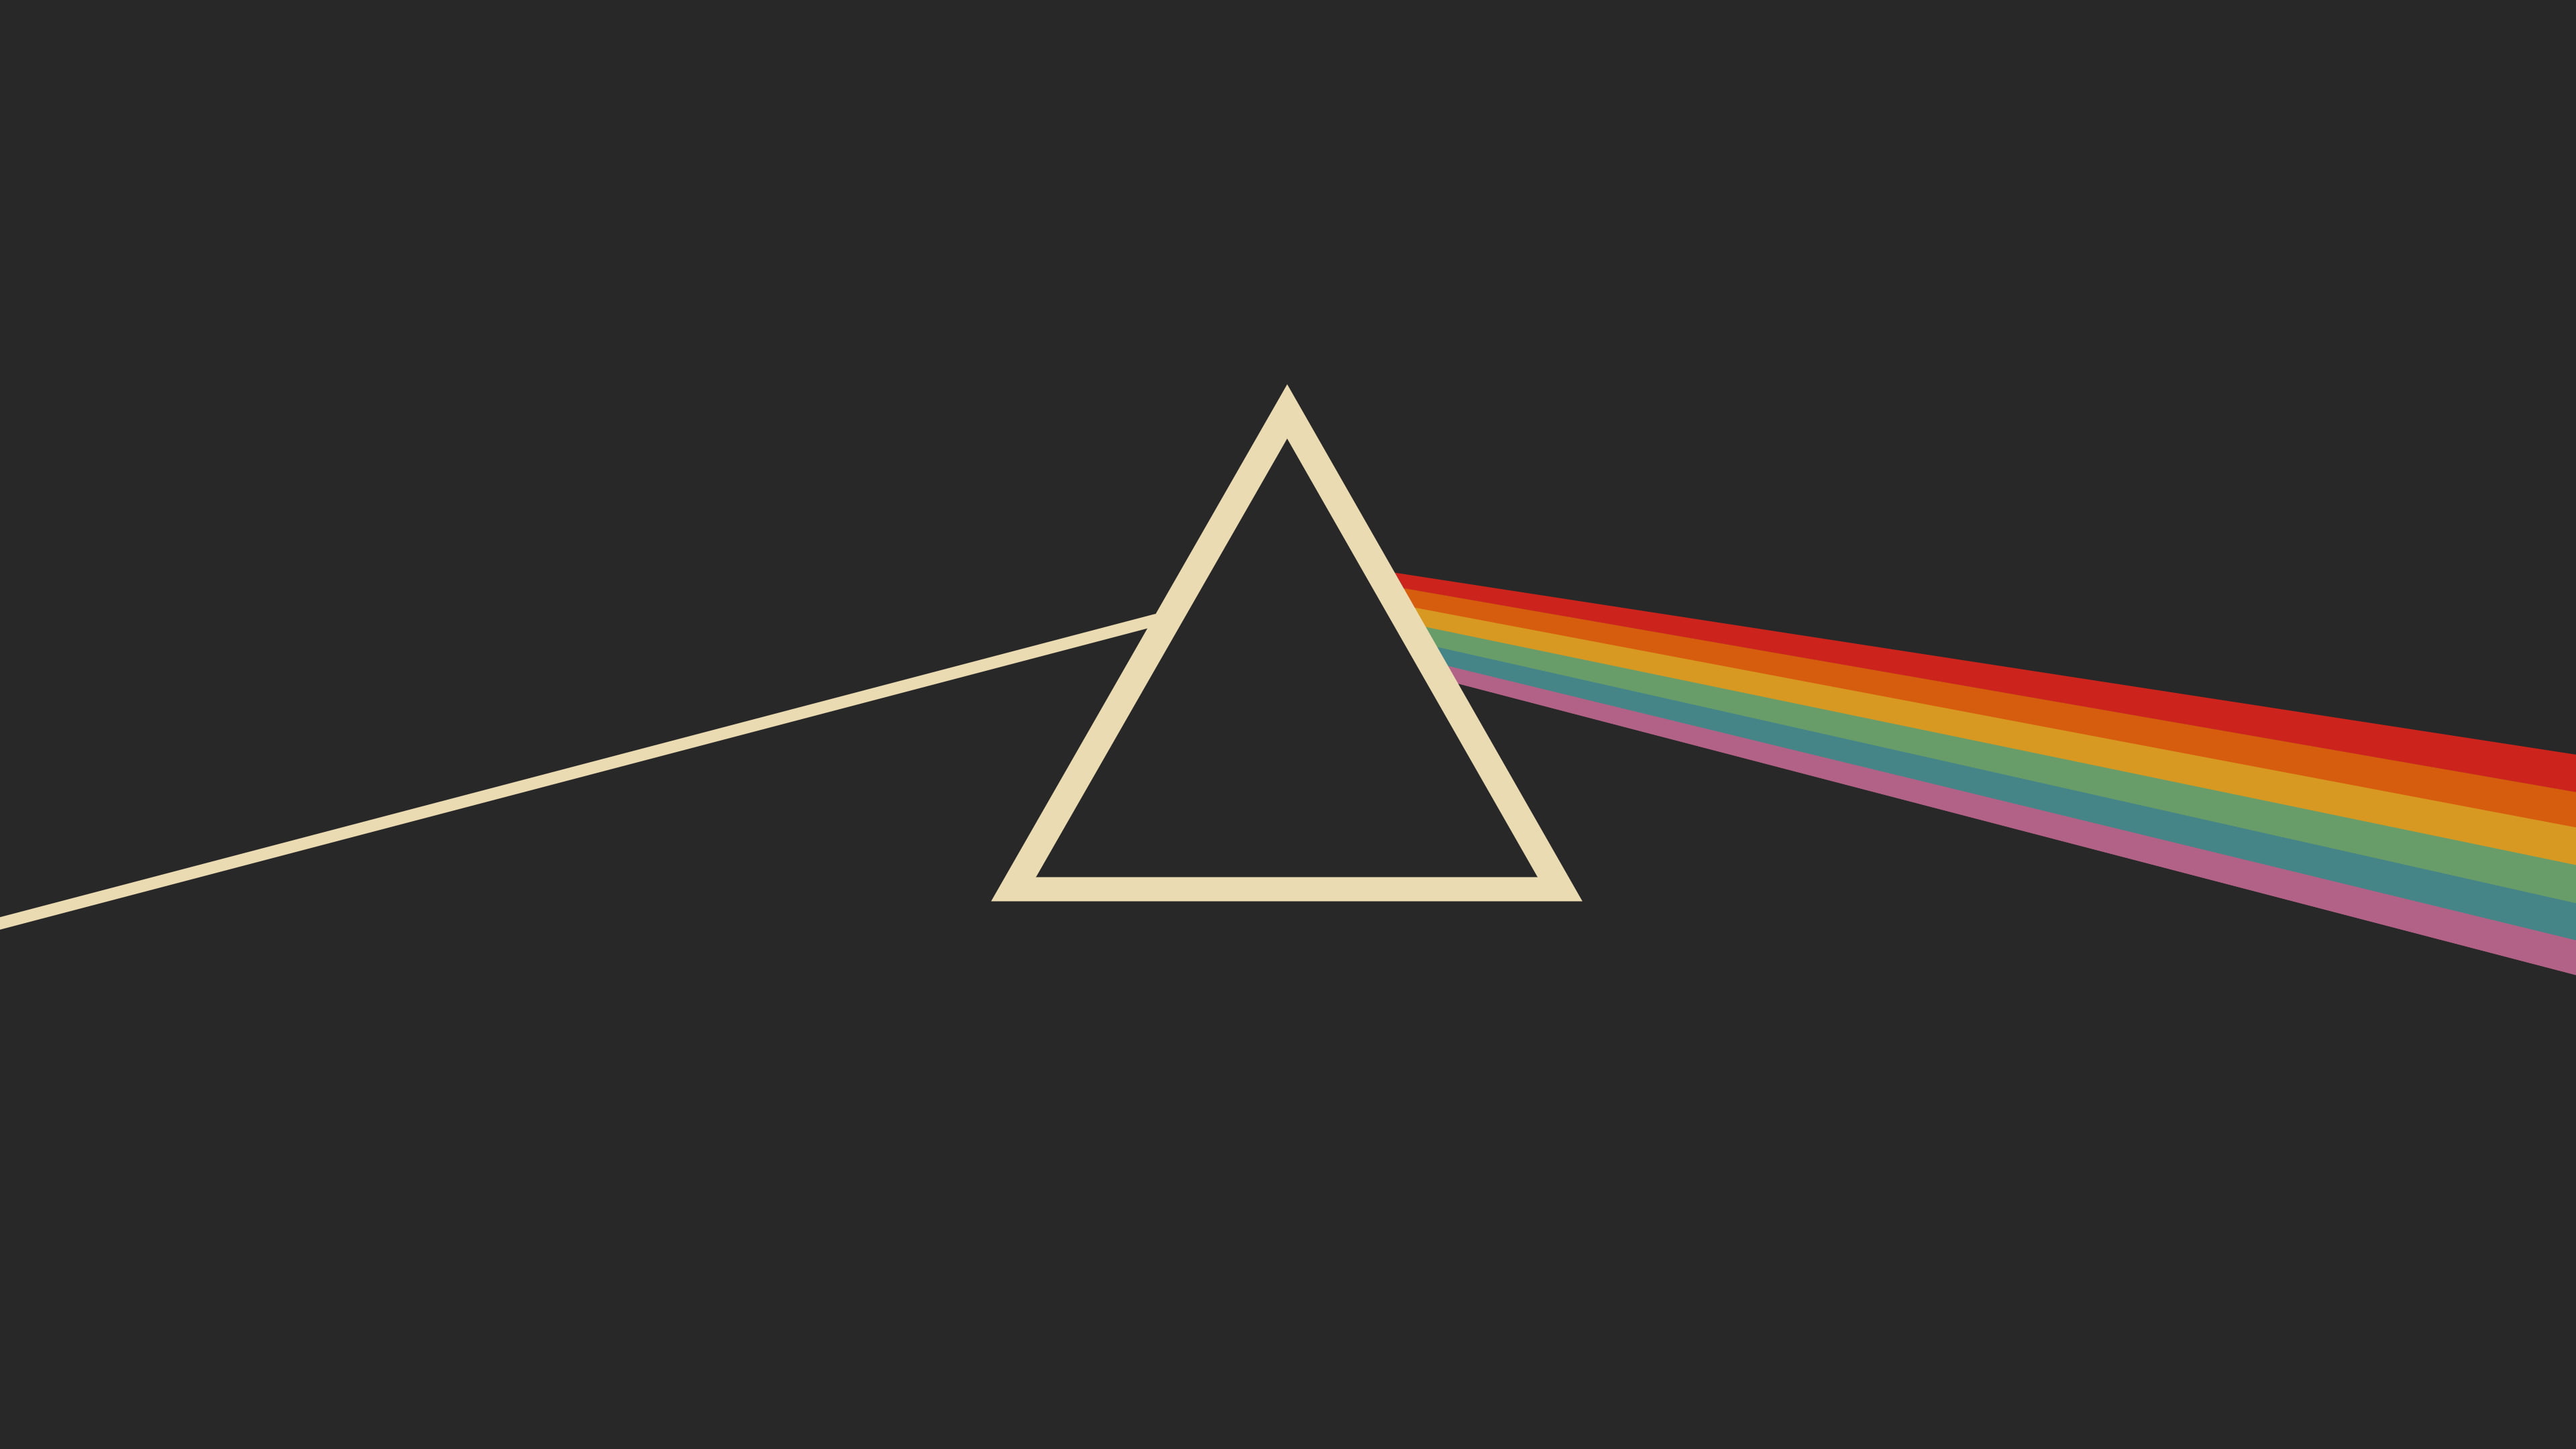 Free download | HD wallpaper: Pink Floyd, gruvbox, Refraction ...